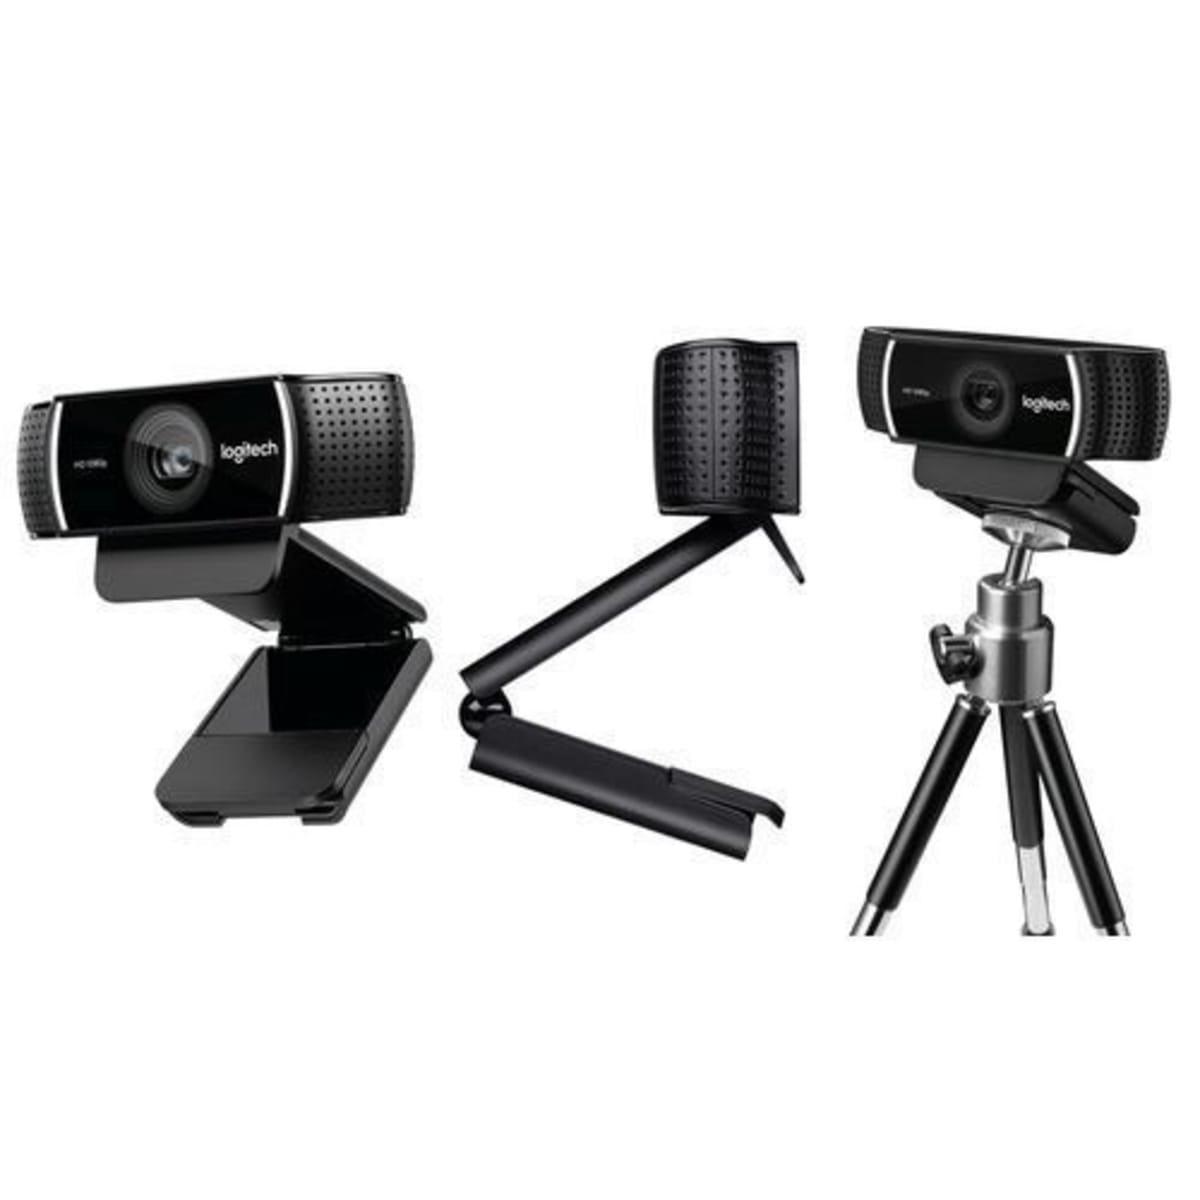  Logitech C922 Pro Stream 1080p Webcam with HD 720p at